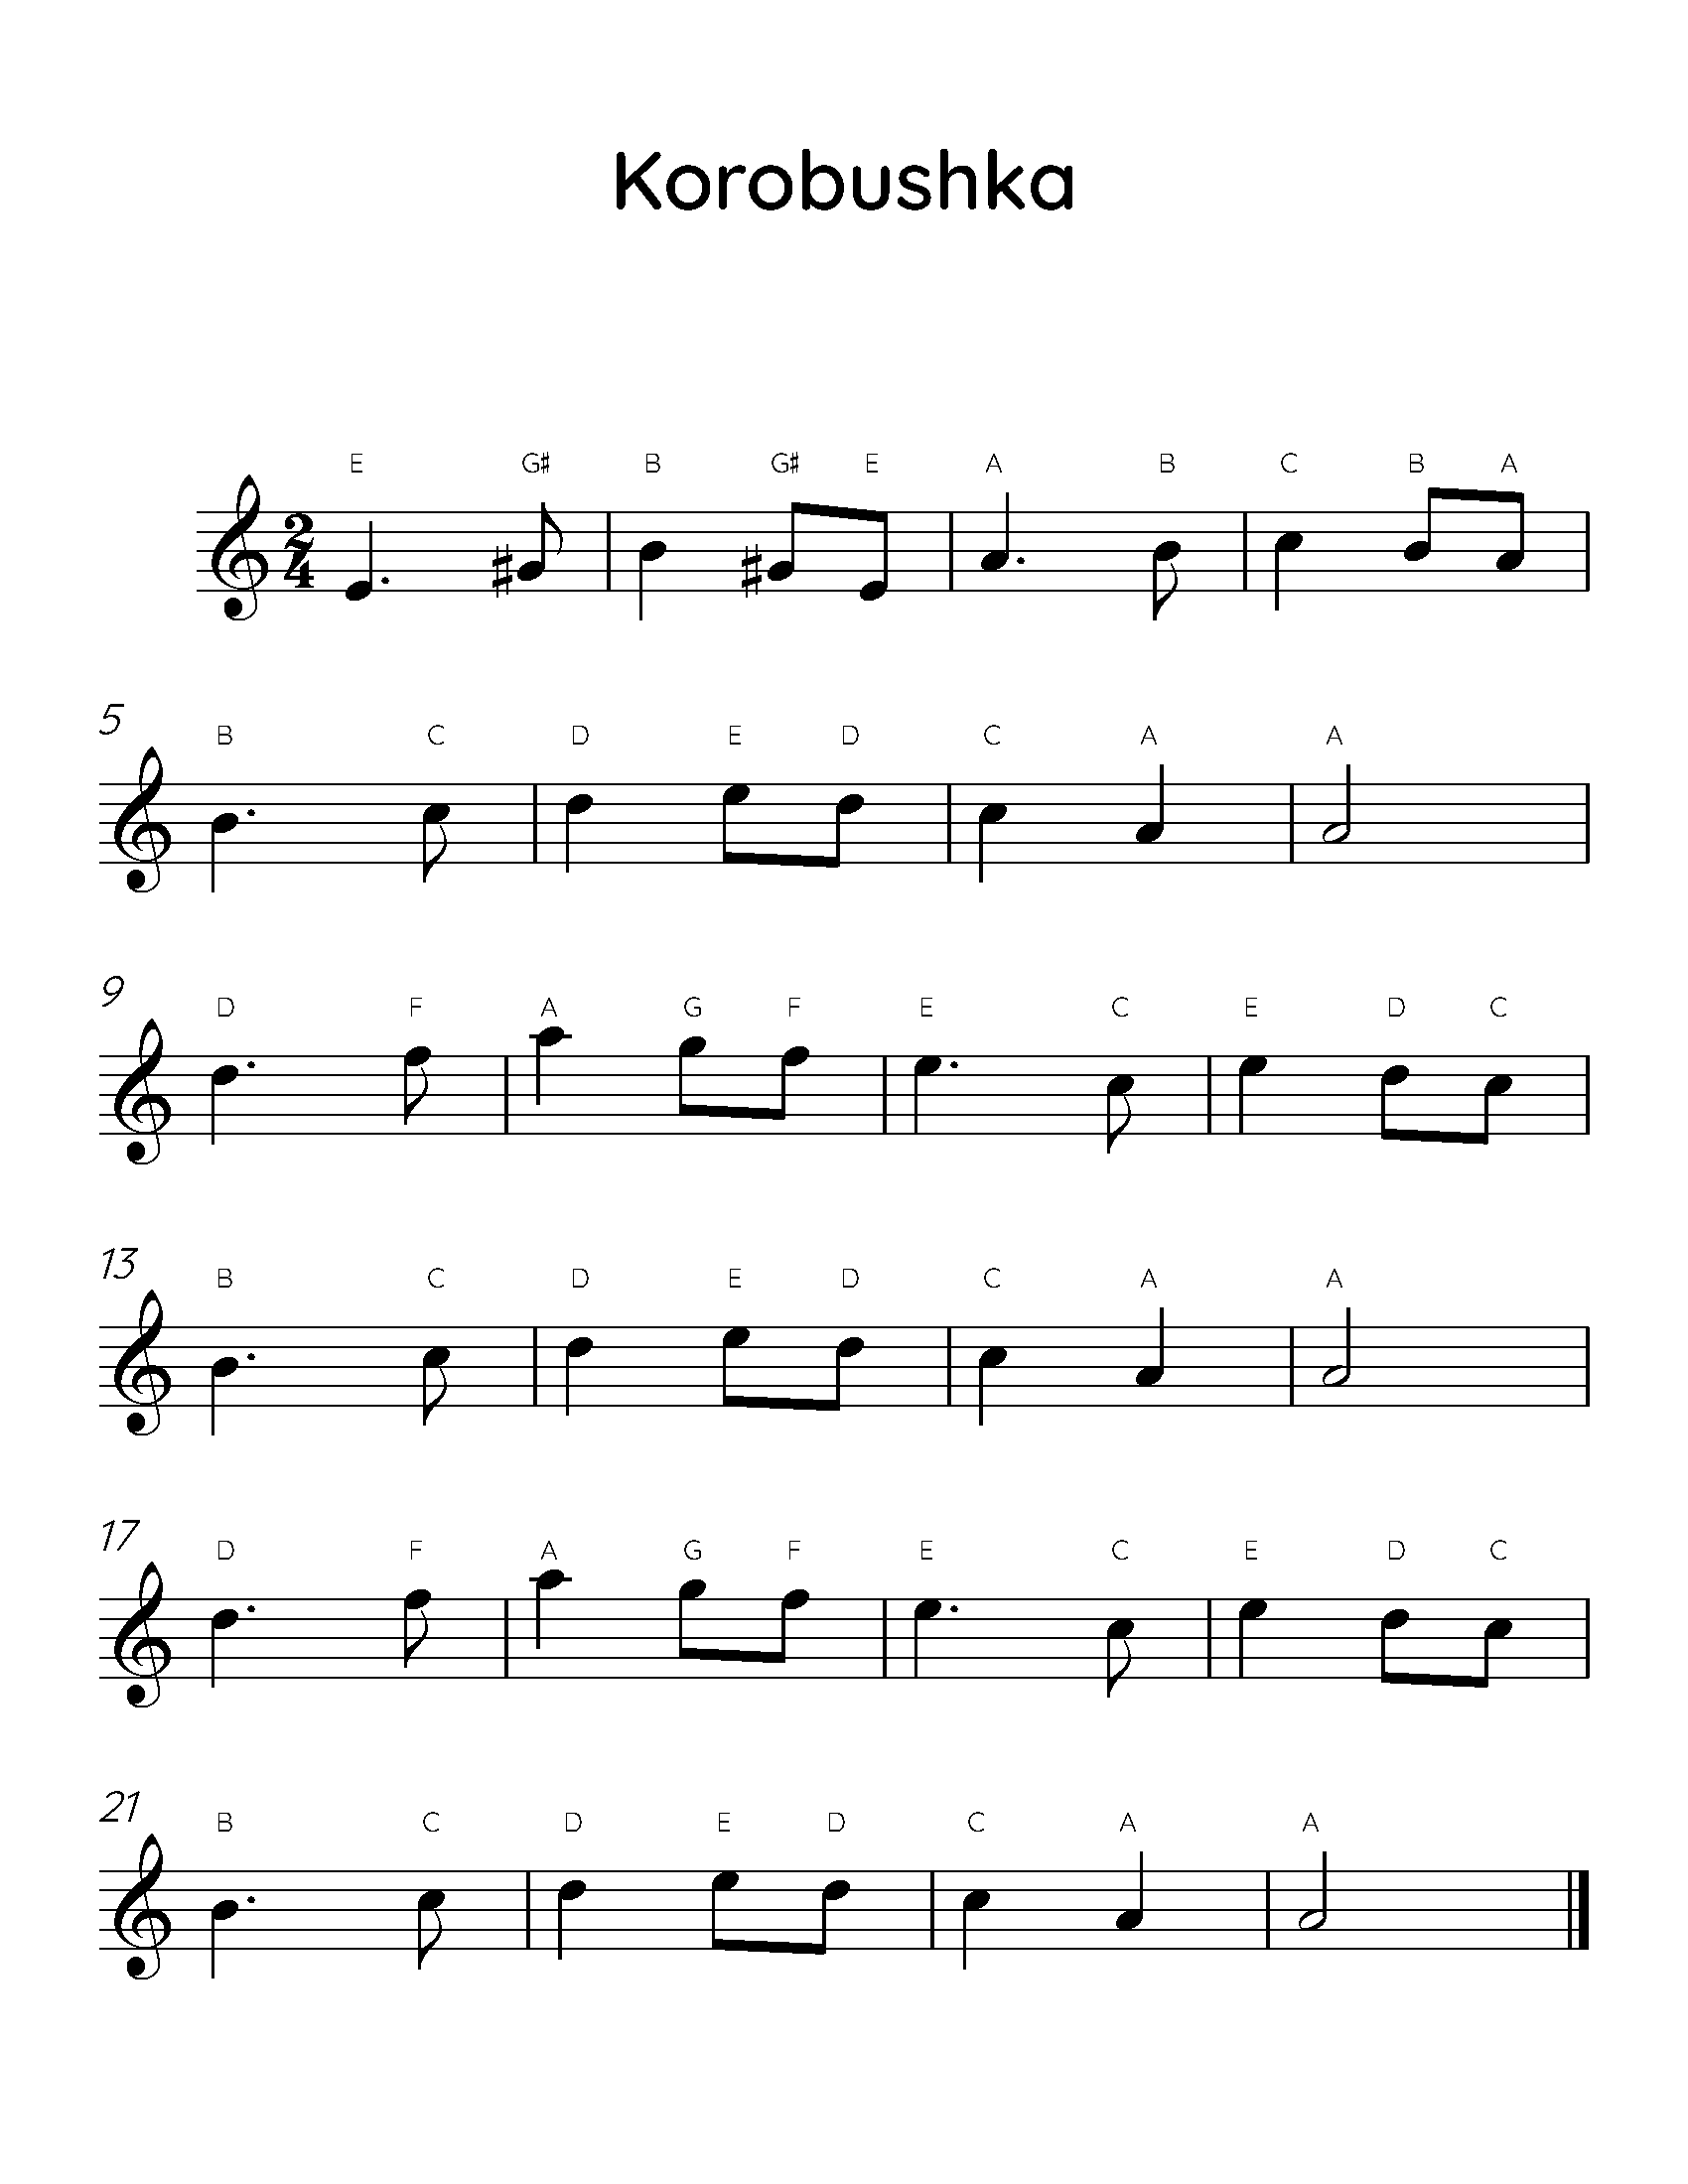 Korobushka - Easy Piano Sheet Music